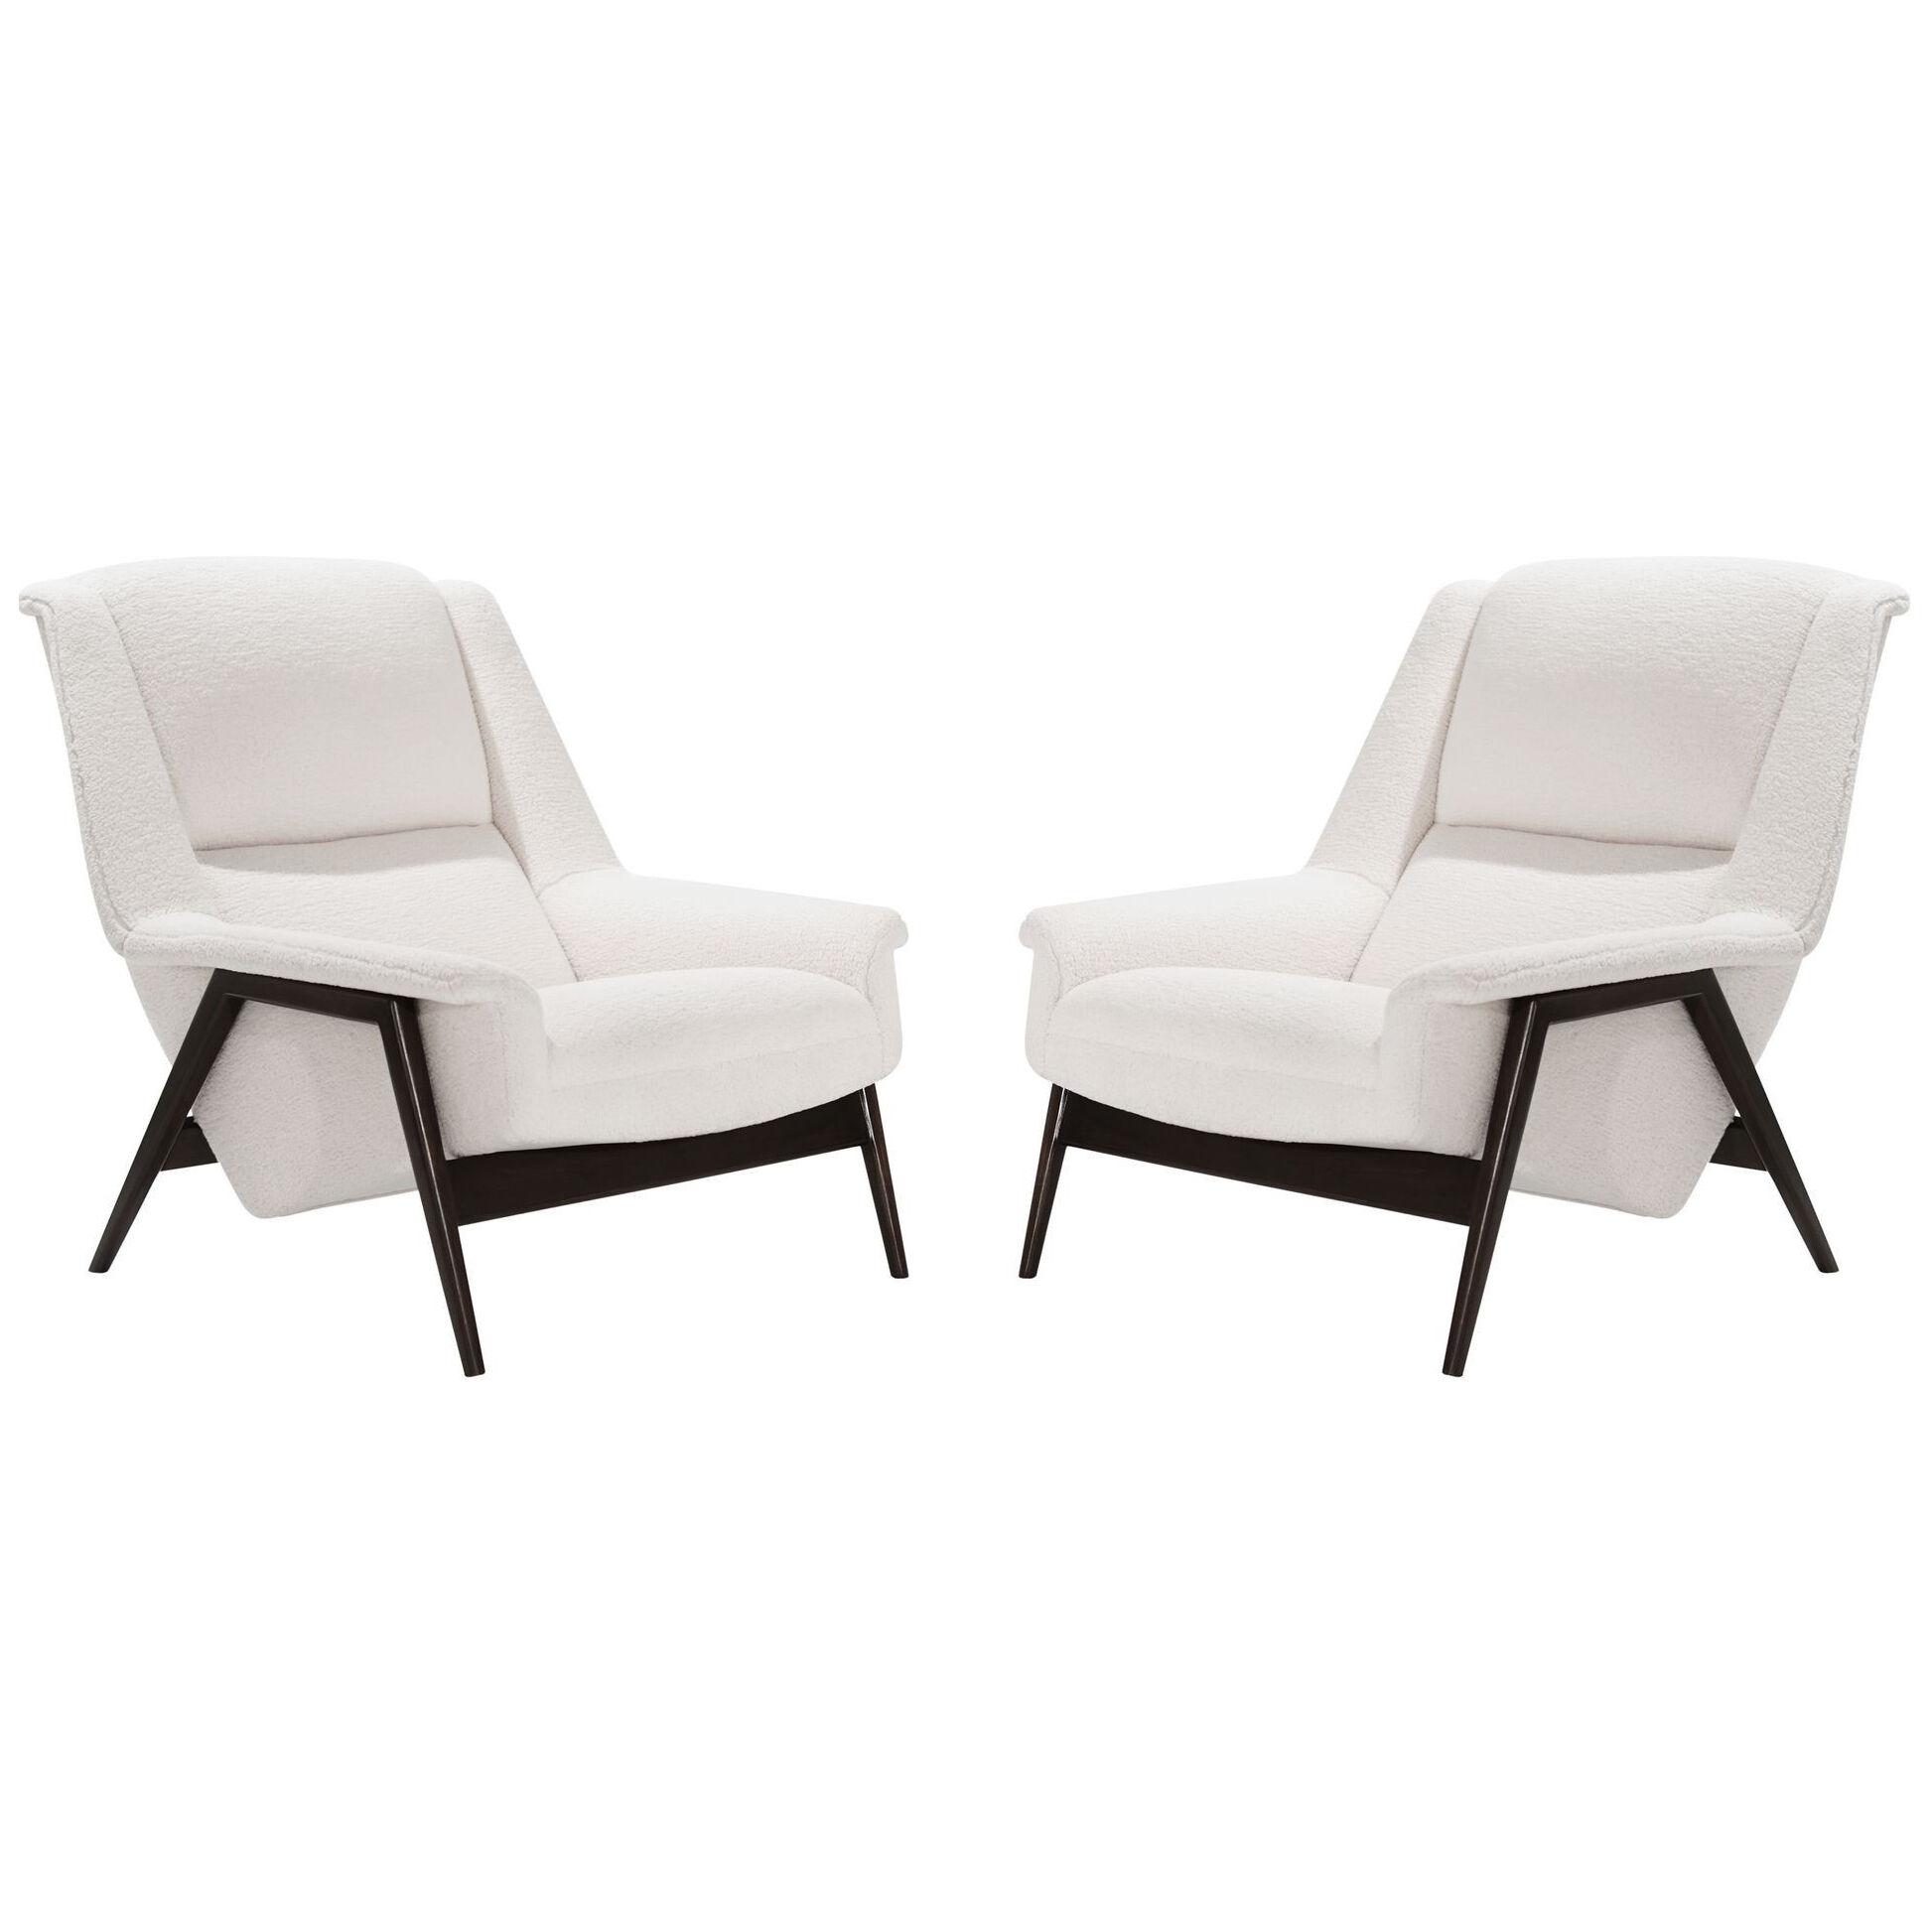 Scandinavian-Modern Lounge Chairs by DUX, Sweden 1960s